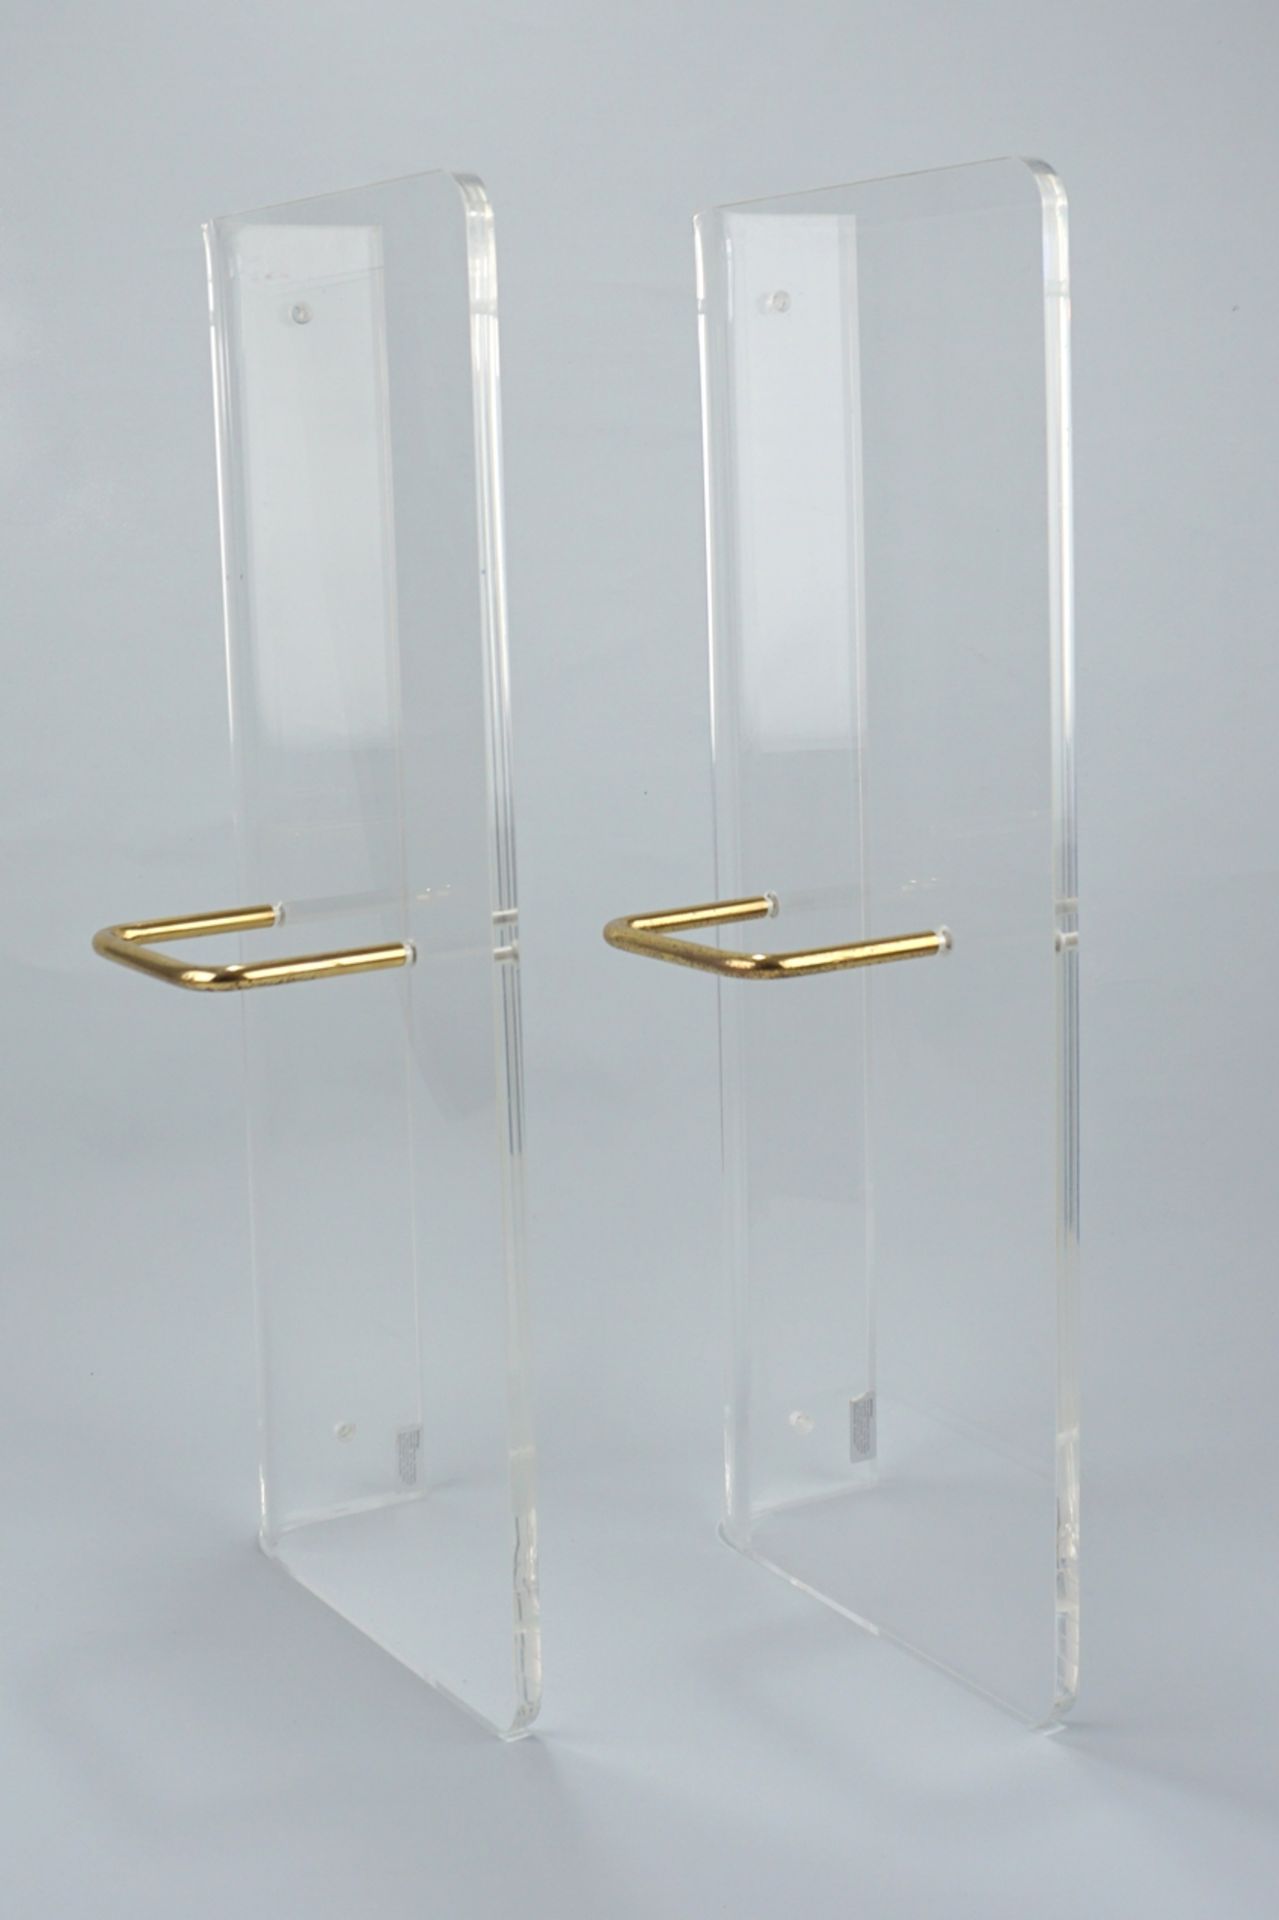 2 Acrylglas-Garderoben, 1970er Jahre - Image 2 of 2